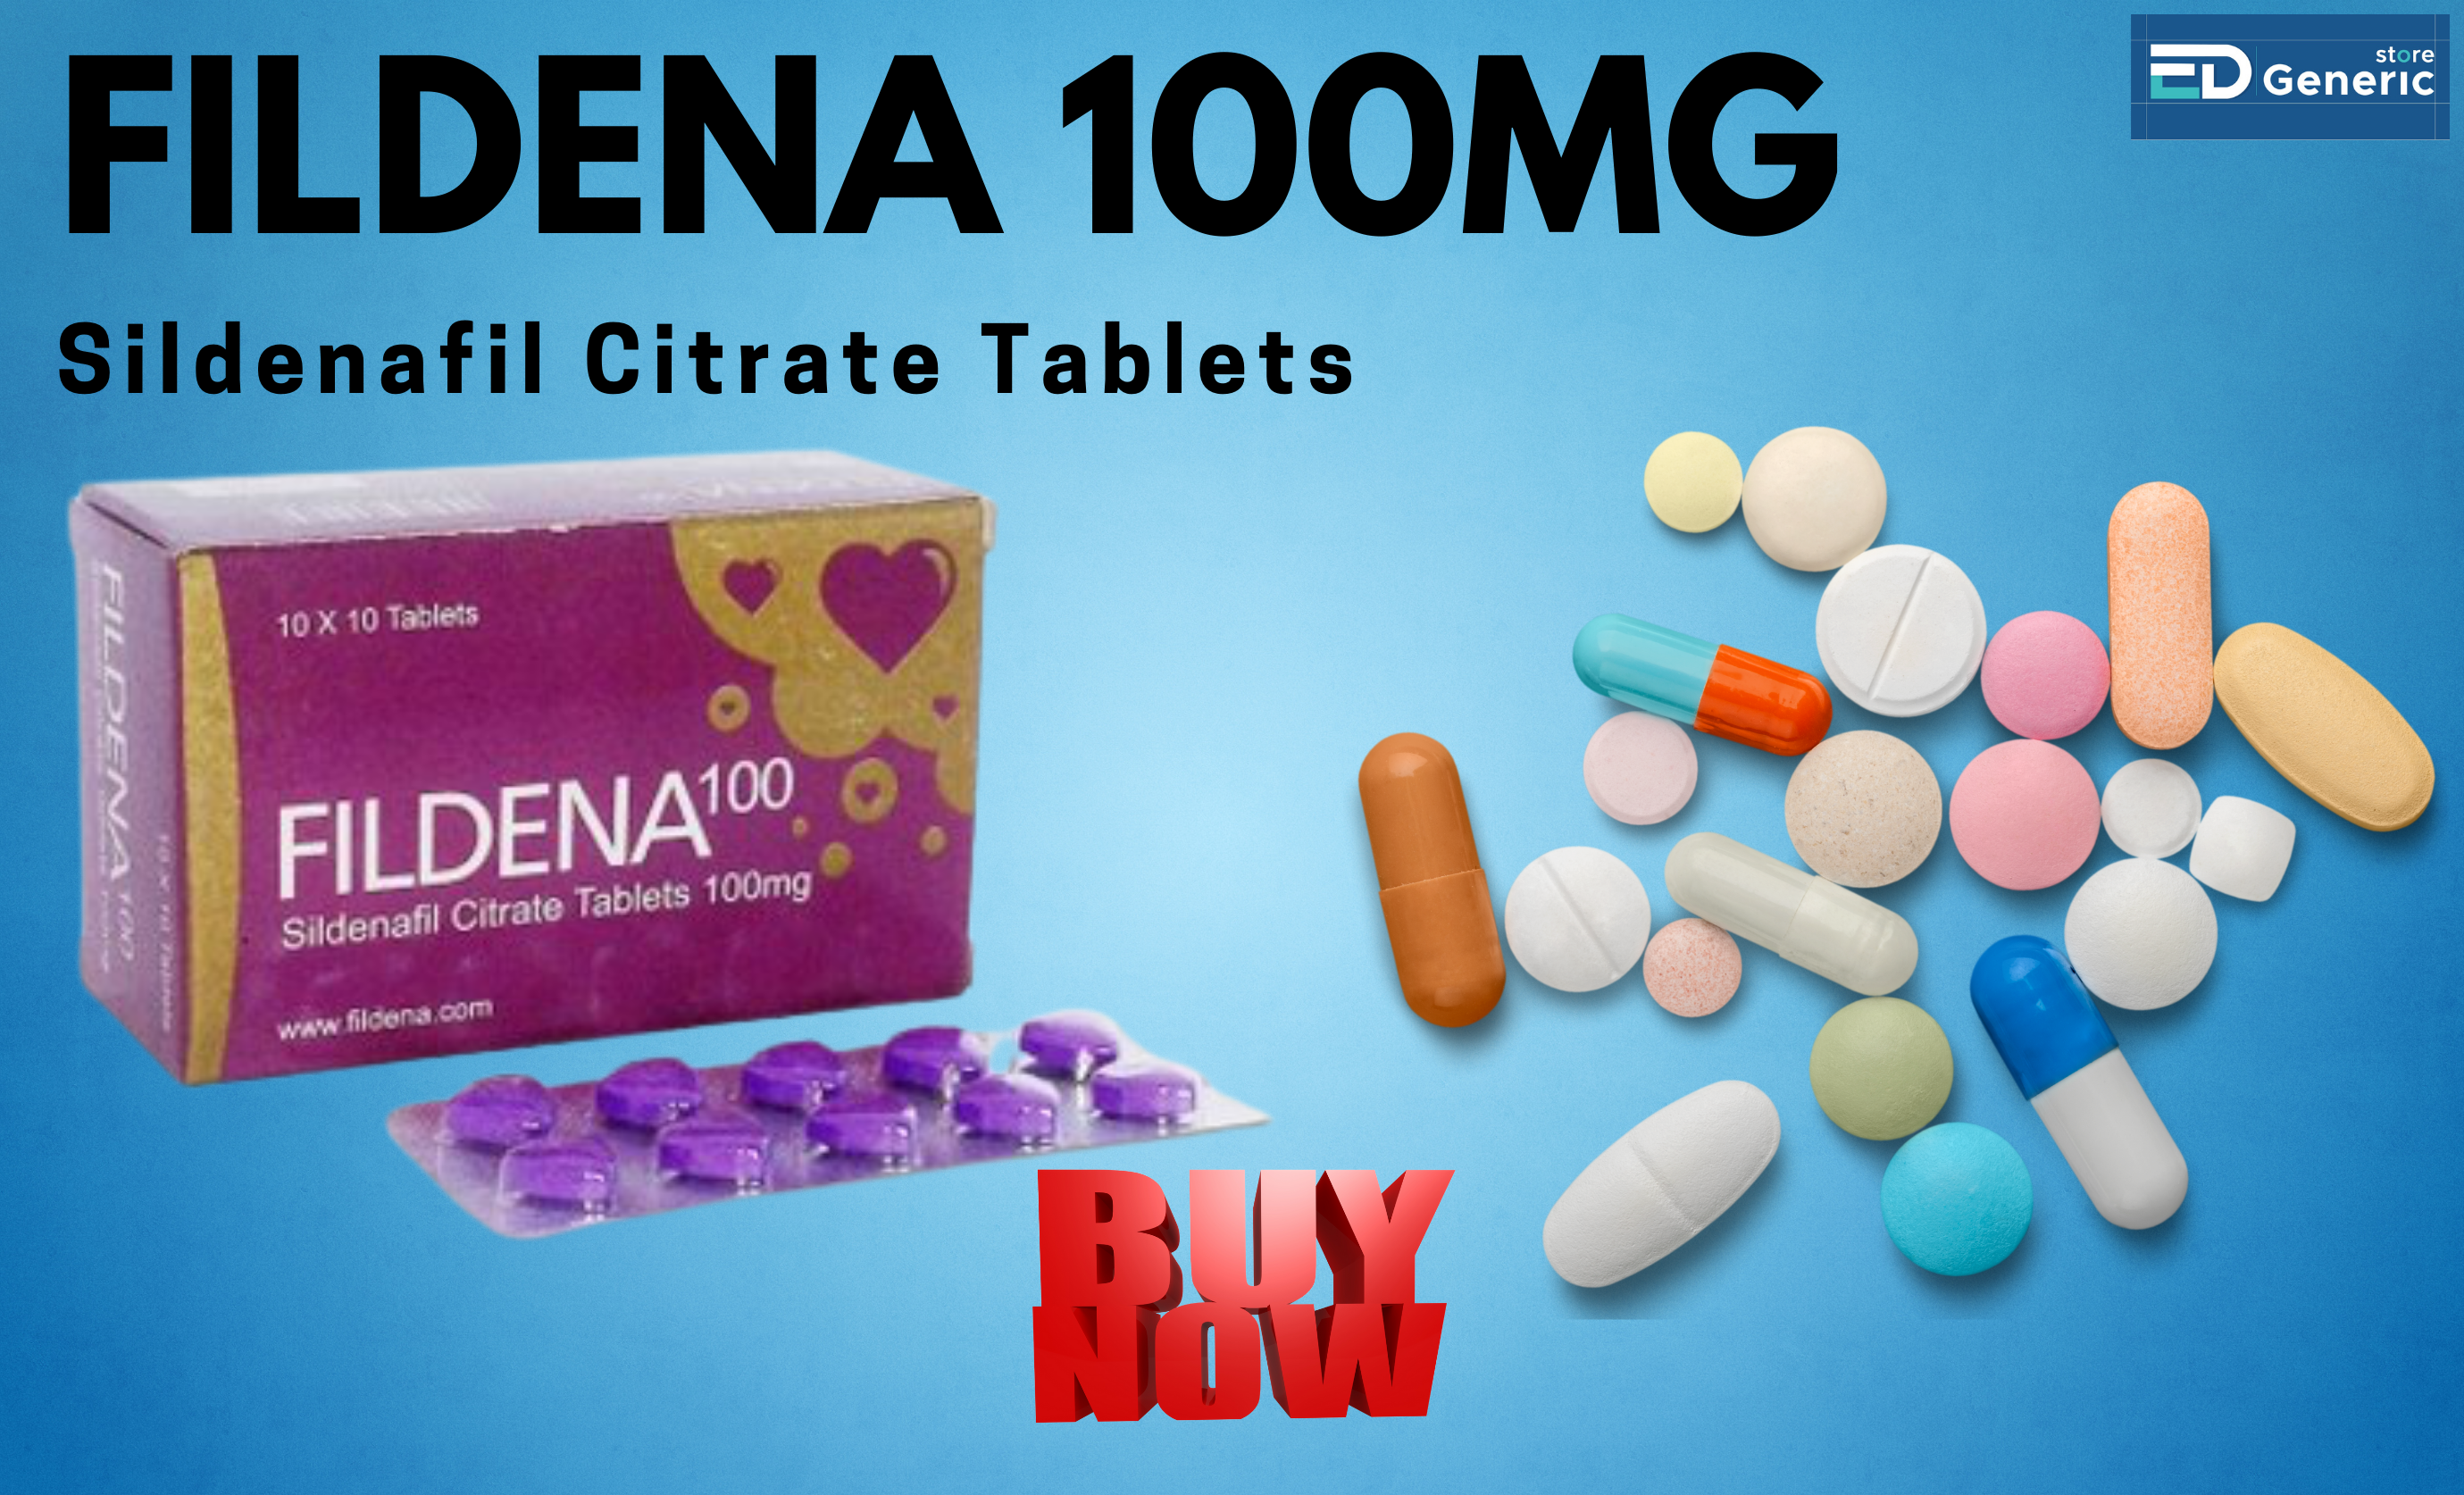 Buy Fildena 100mg online | Ed Generic Store